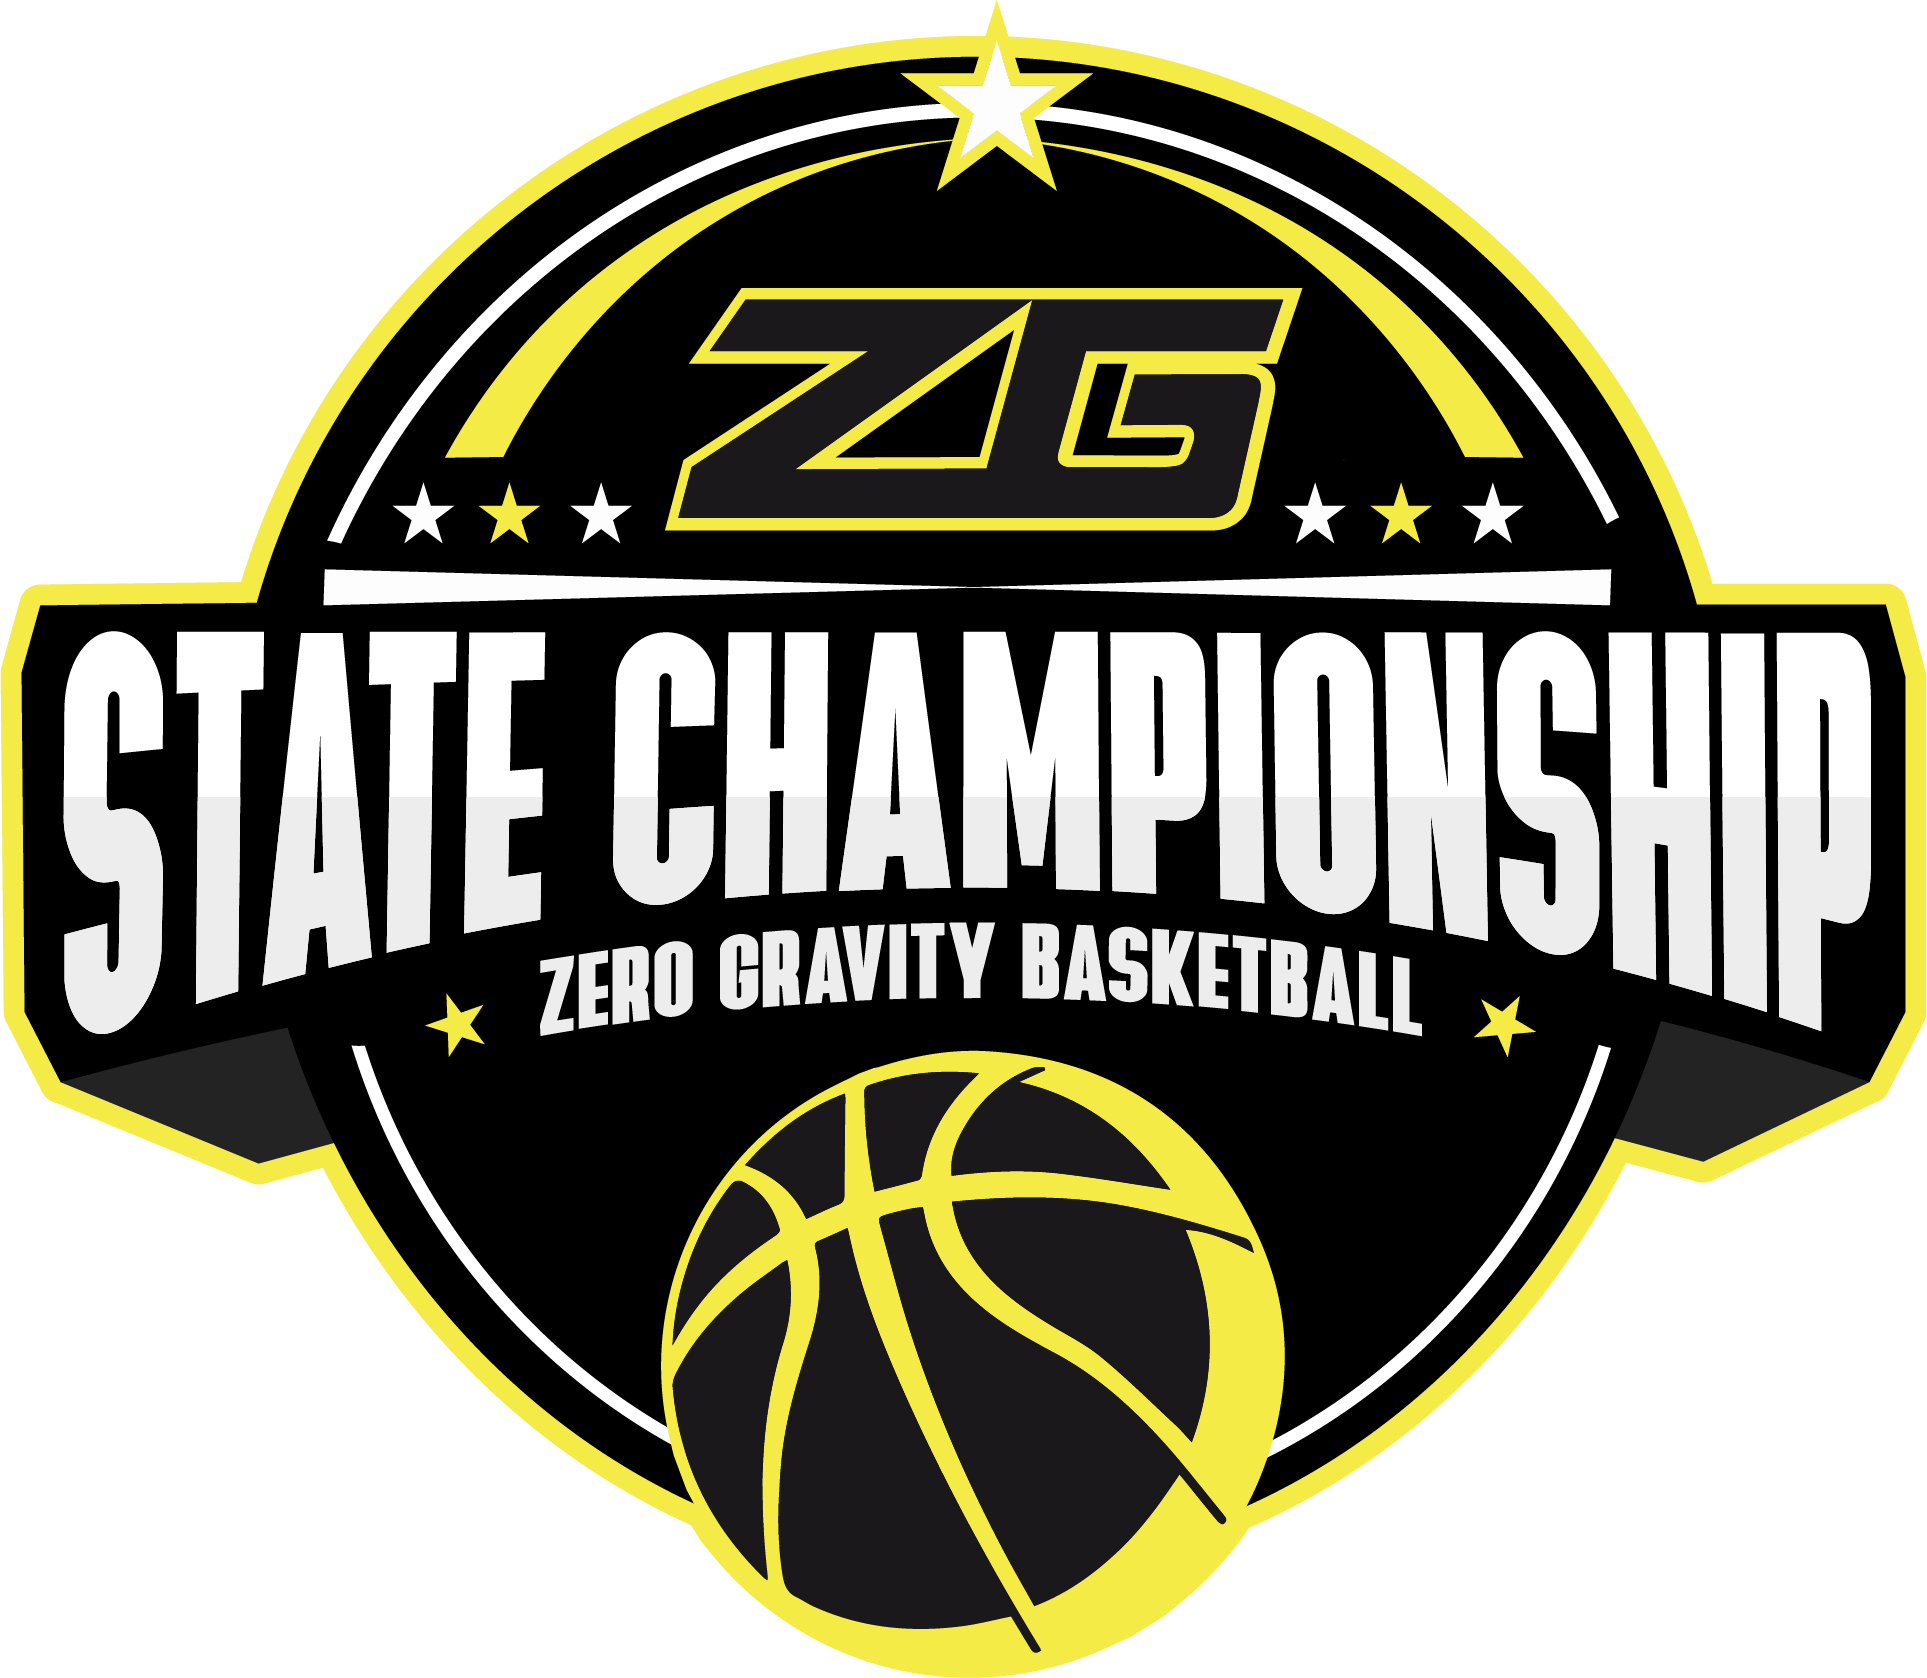 ZG State Championship